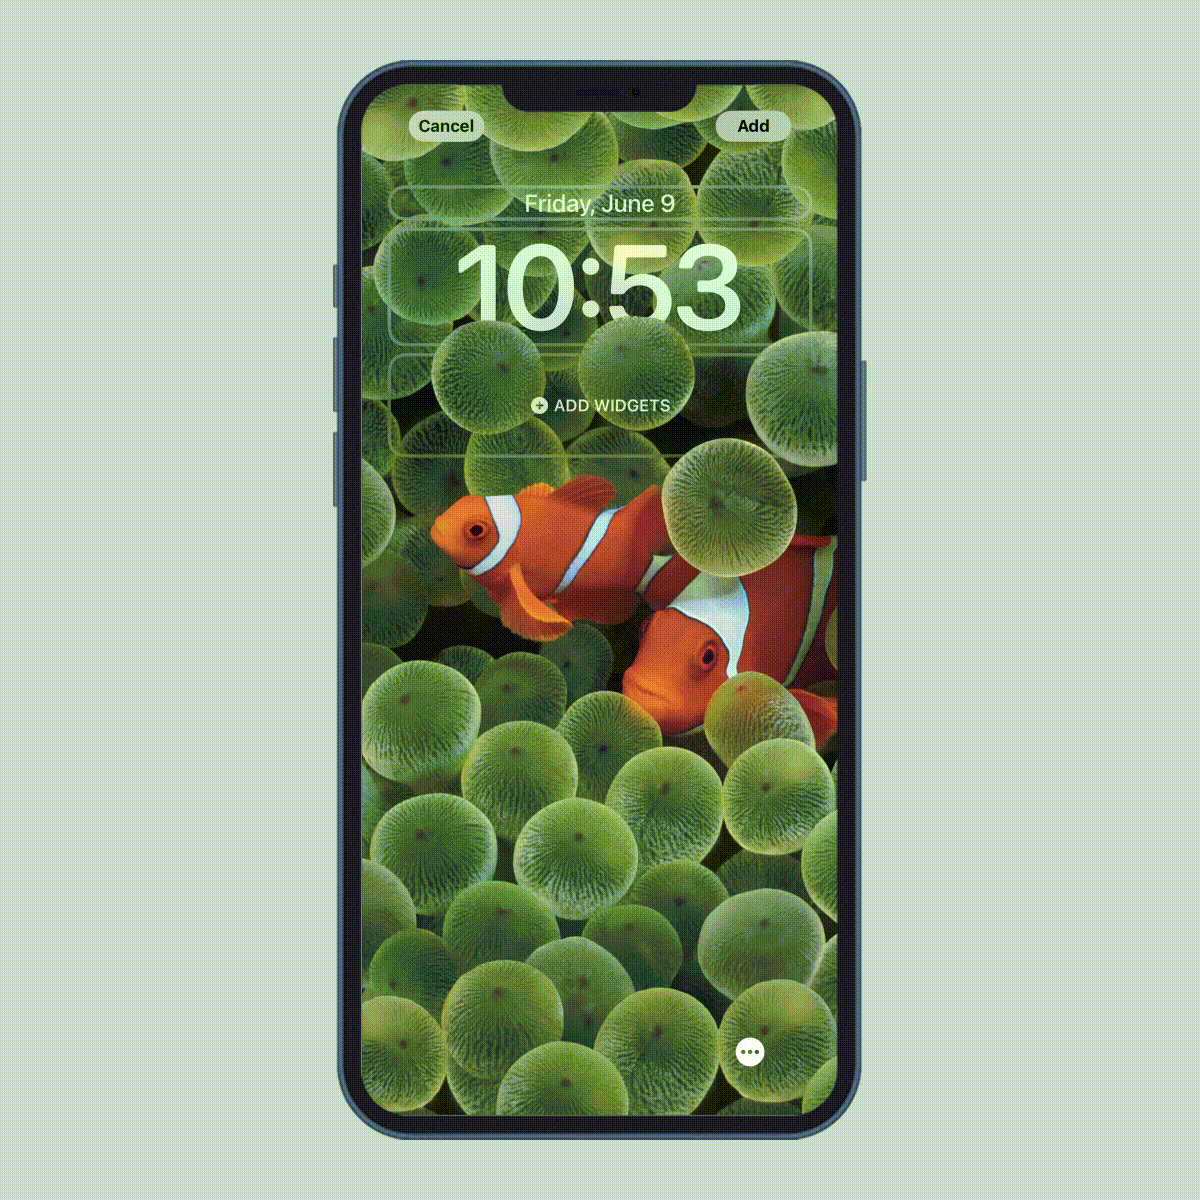 apple iphone home screen wallpaper